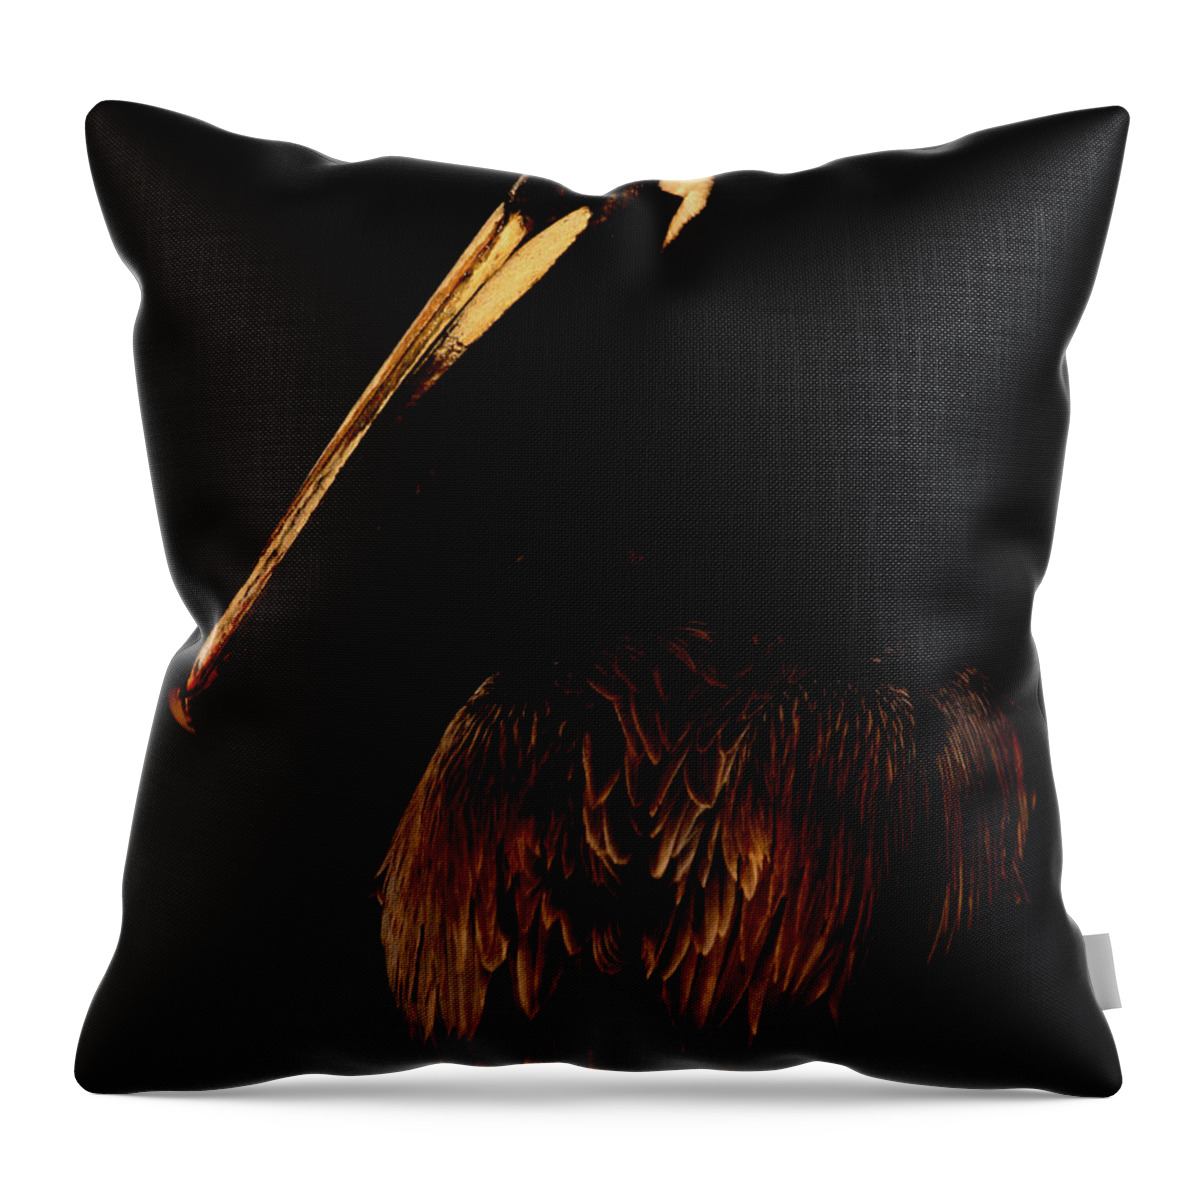 Brown Pelican Throw Pillow featuring the digital art Got Fish by Joseph G Holland